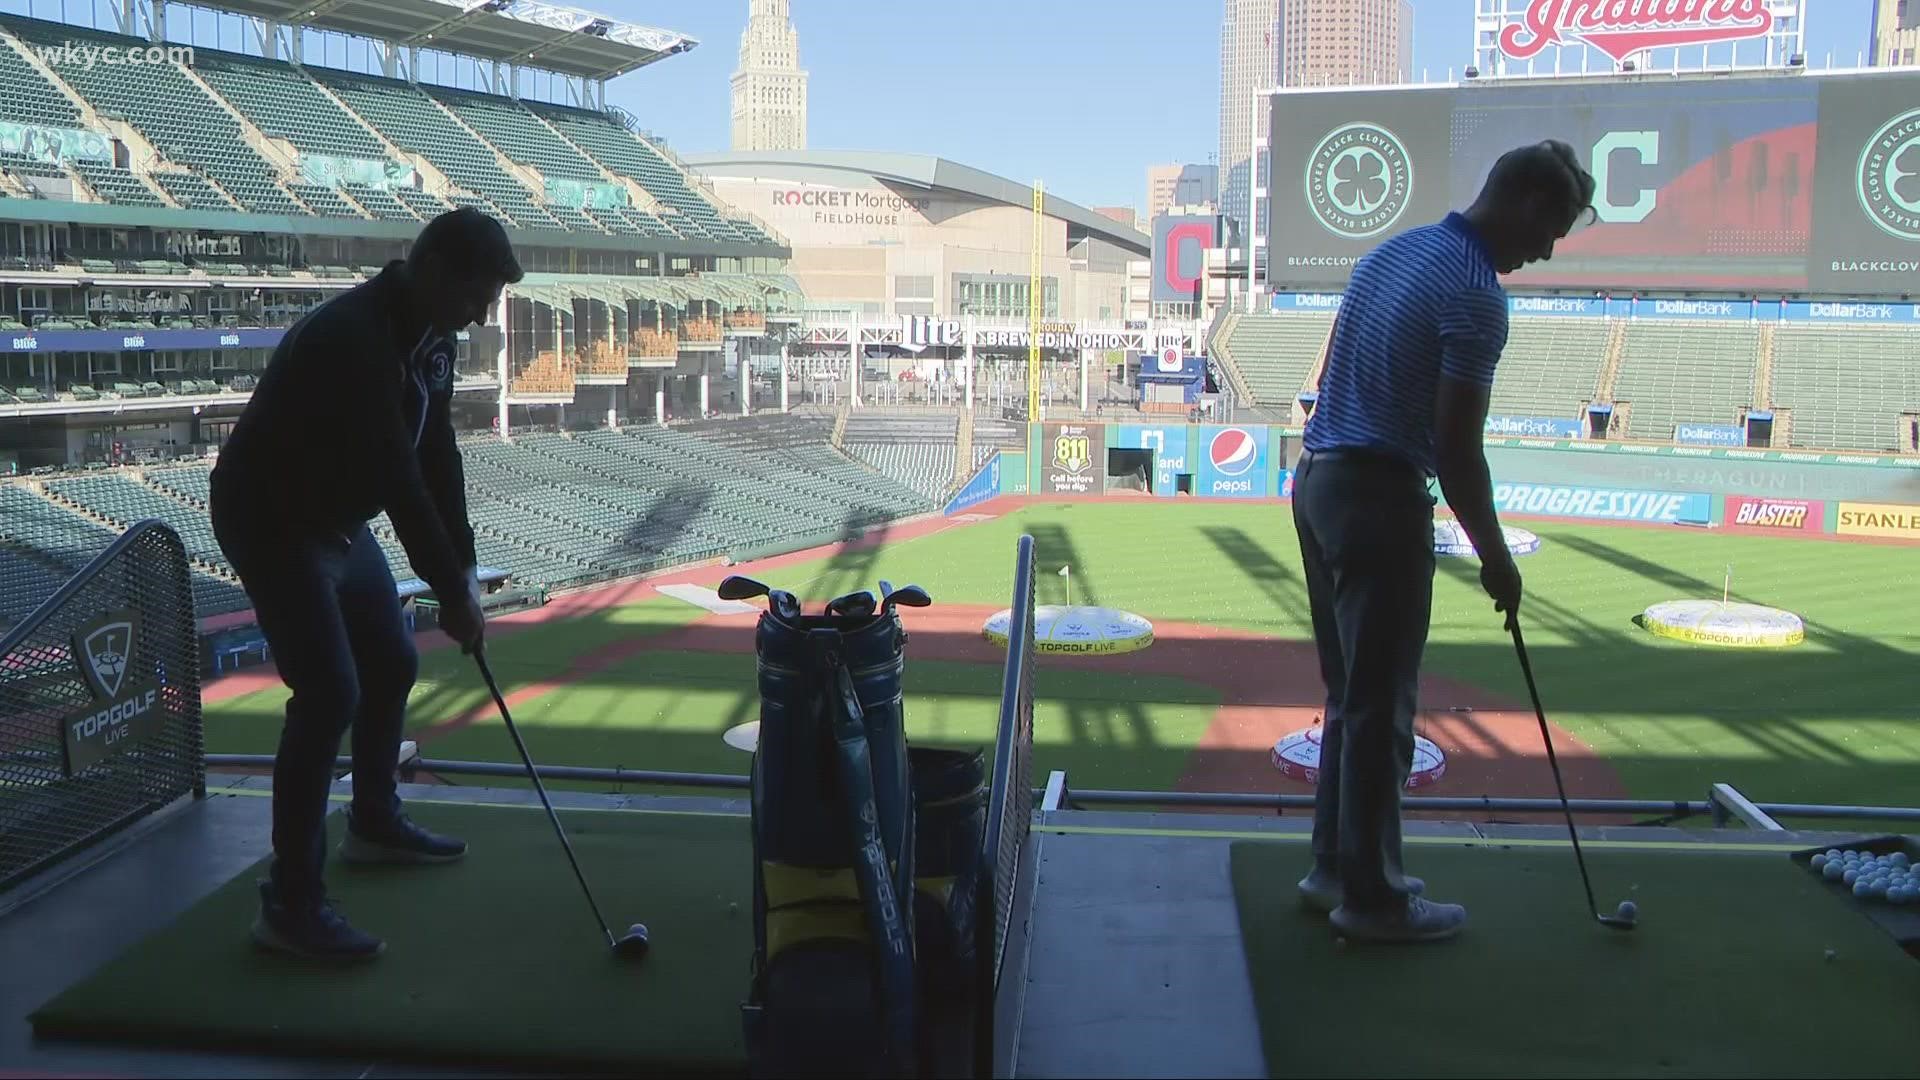 Progressive Field is trading baseballs for golf balls as Topgolf Live takes over the stadium.